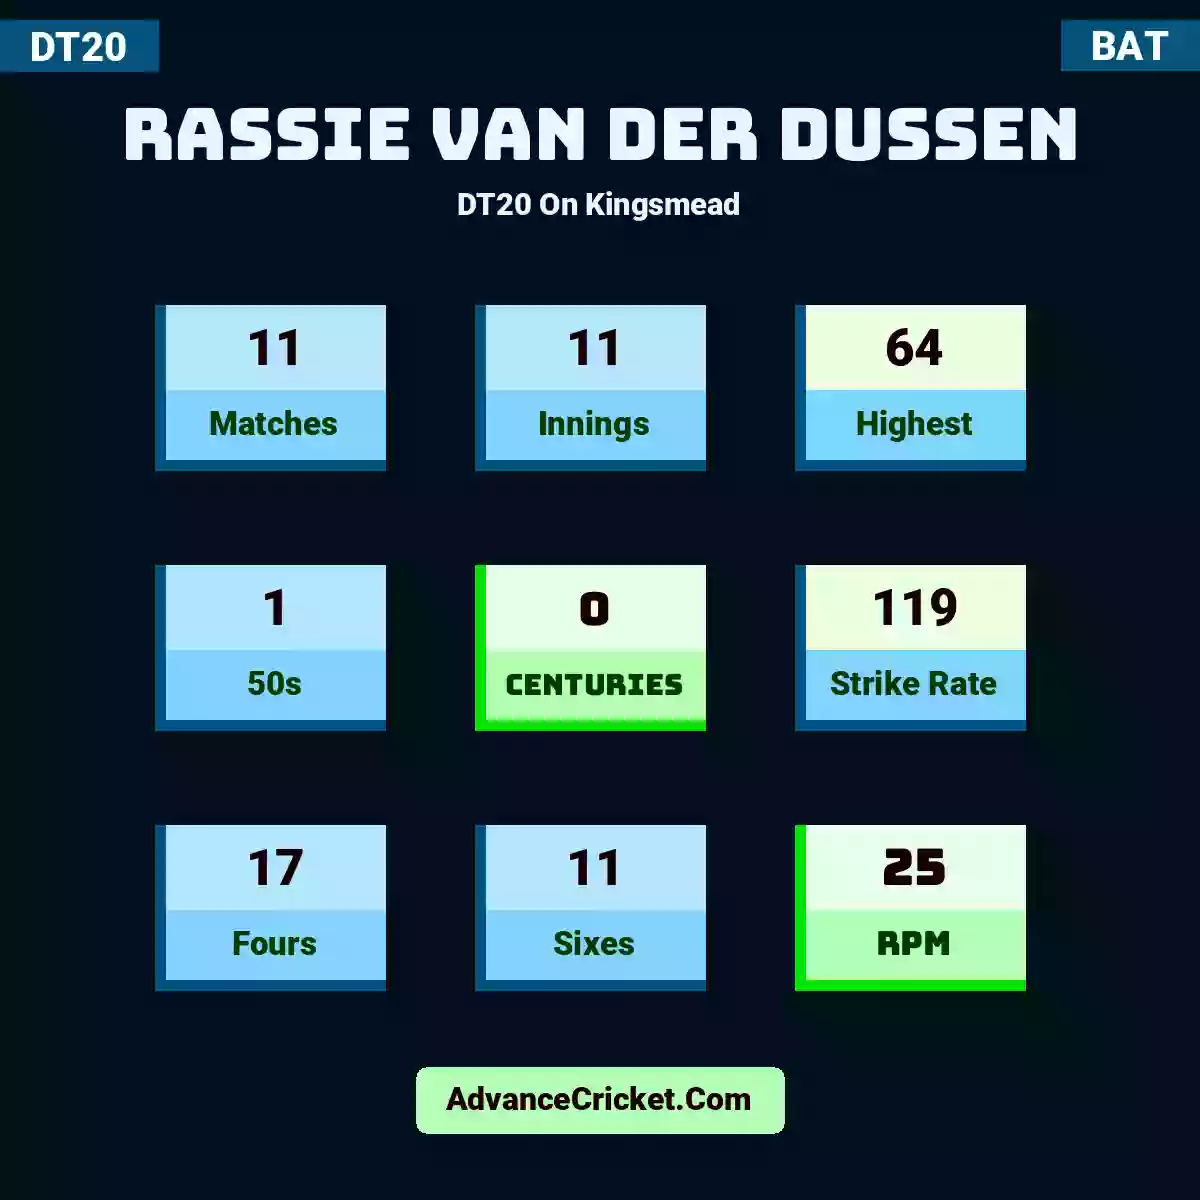 Rassie van der Dussen DT20  On Kingsmead, Rassie van der Dussen played 11 matches, scored 64 runs as highest, 1 half-centuries, and 0 centuries, with a strike rate of 119. R.Dussen hit 17 fours and 11 sixes, with an RPM of 25.